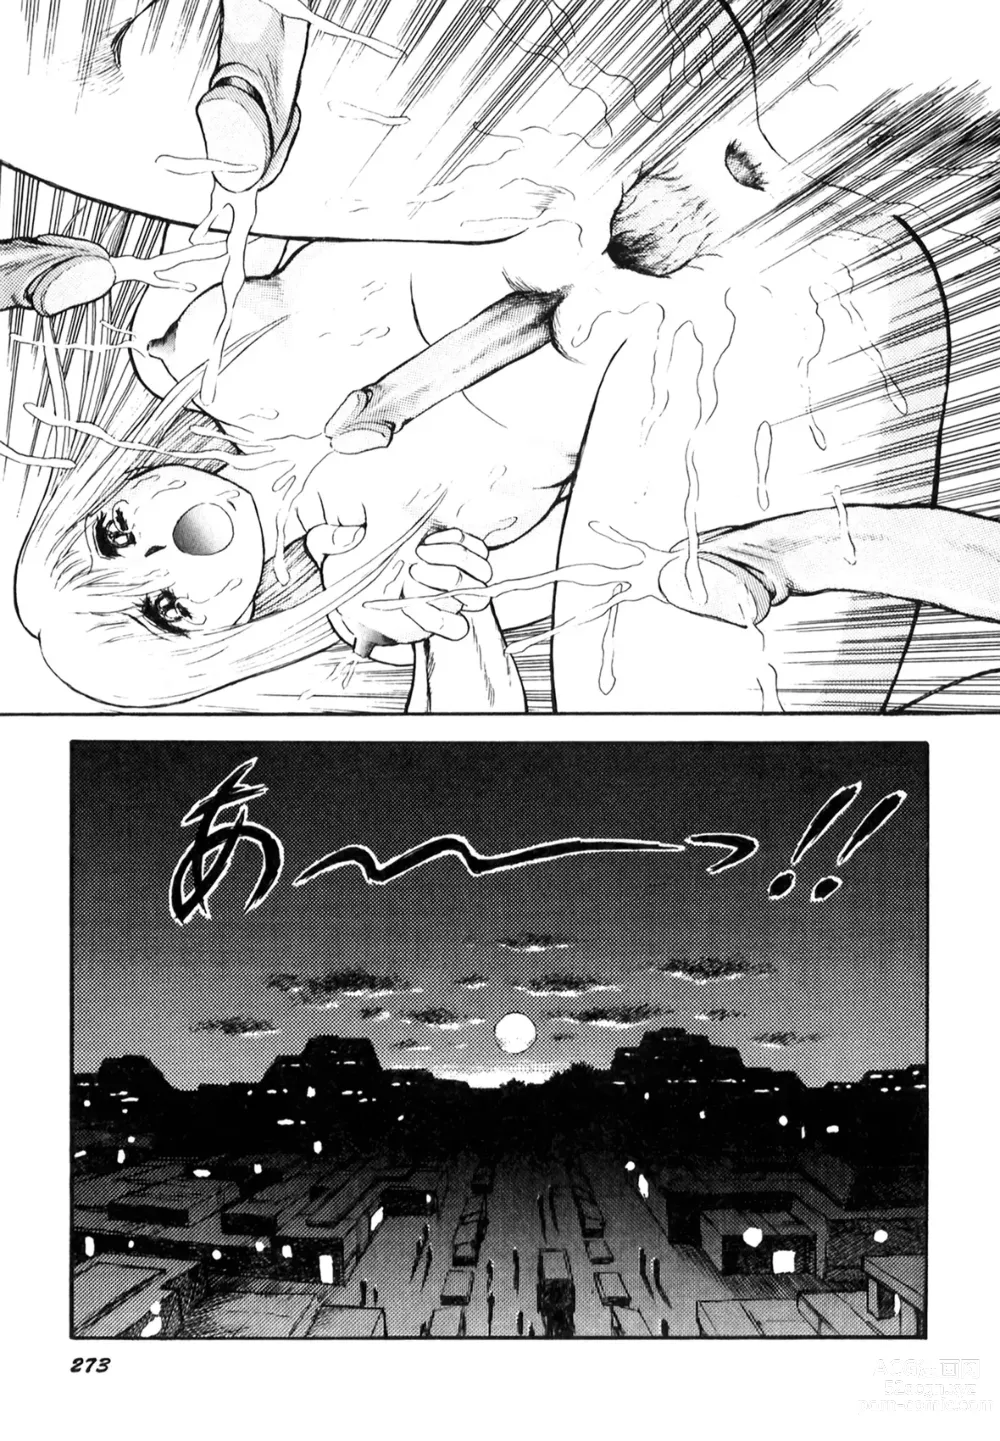 Page 274 of manga Dorei Senshi Maya I